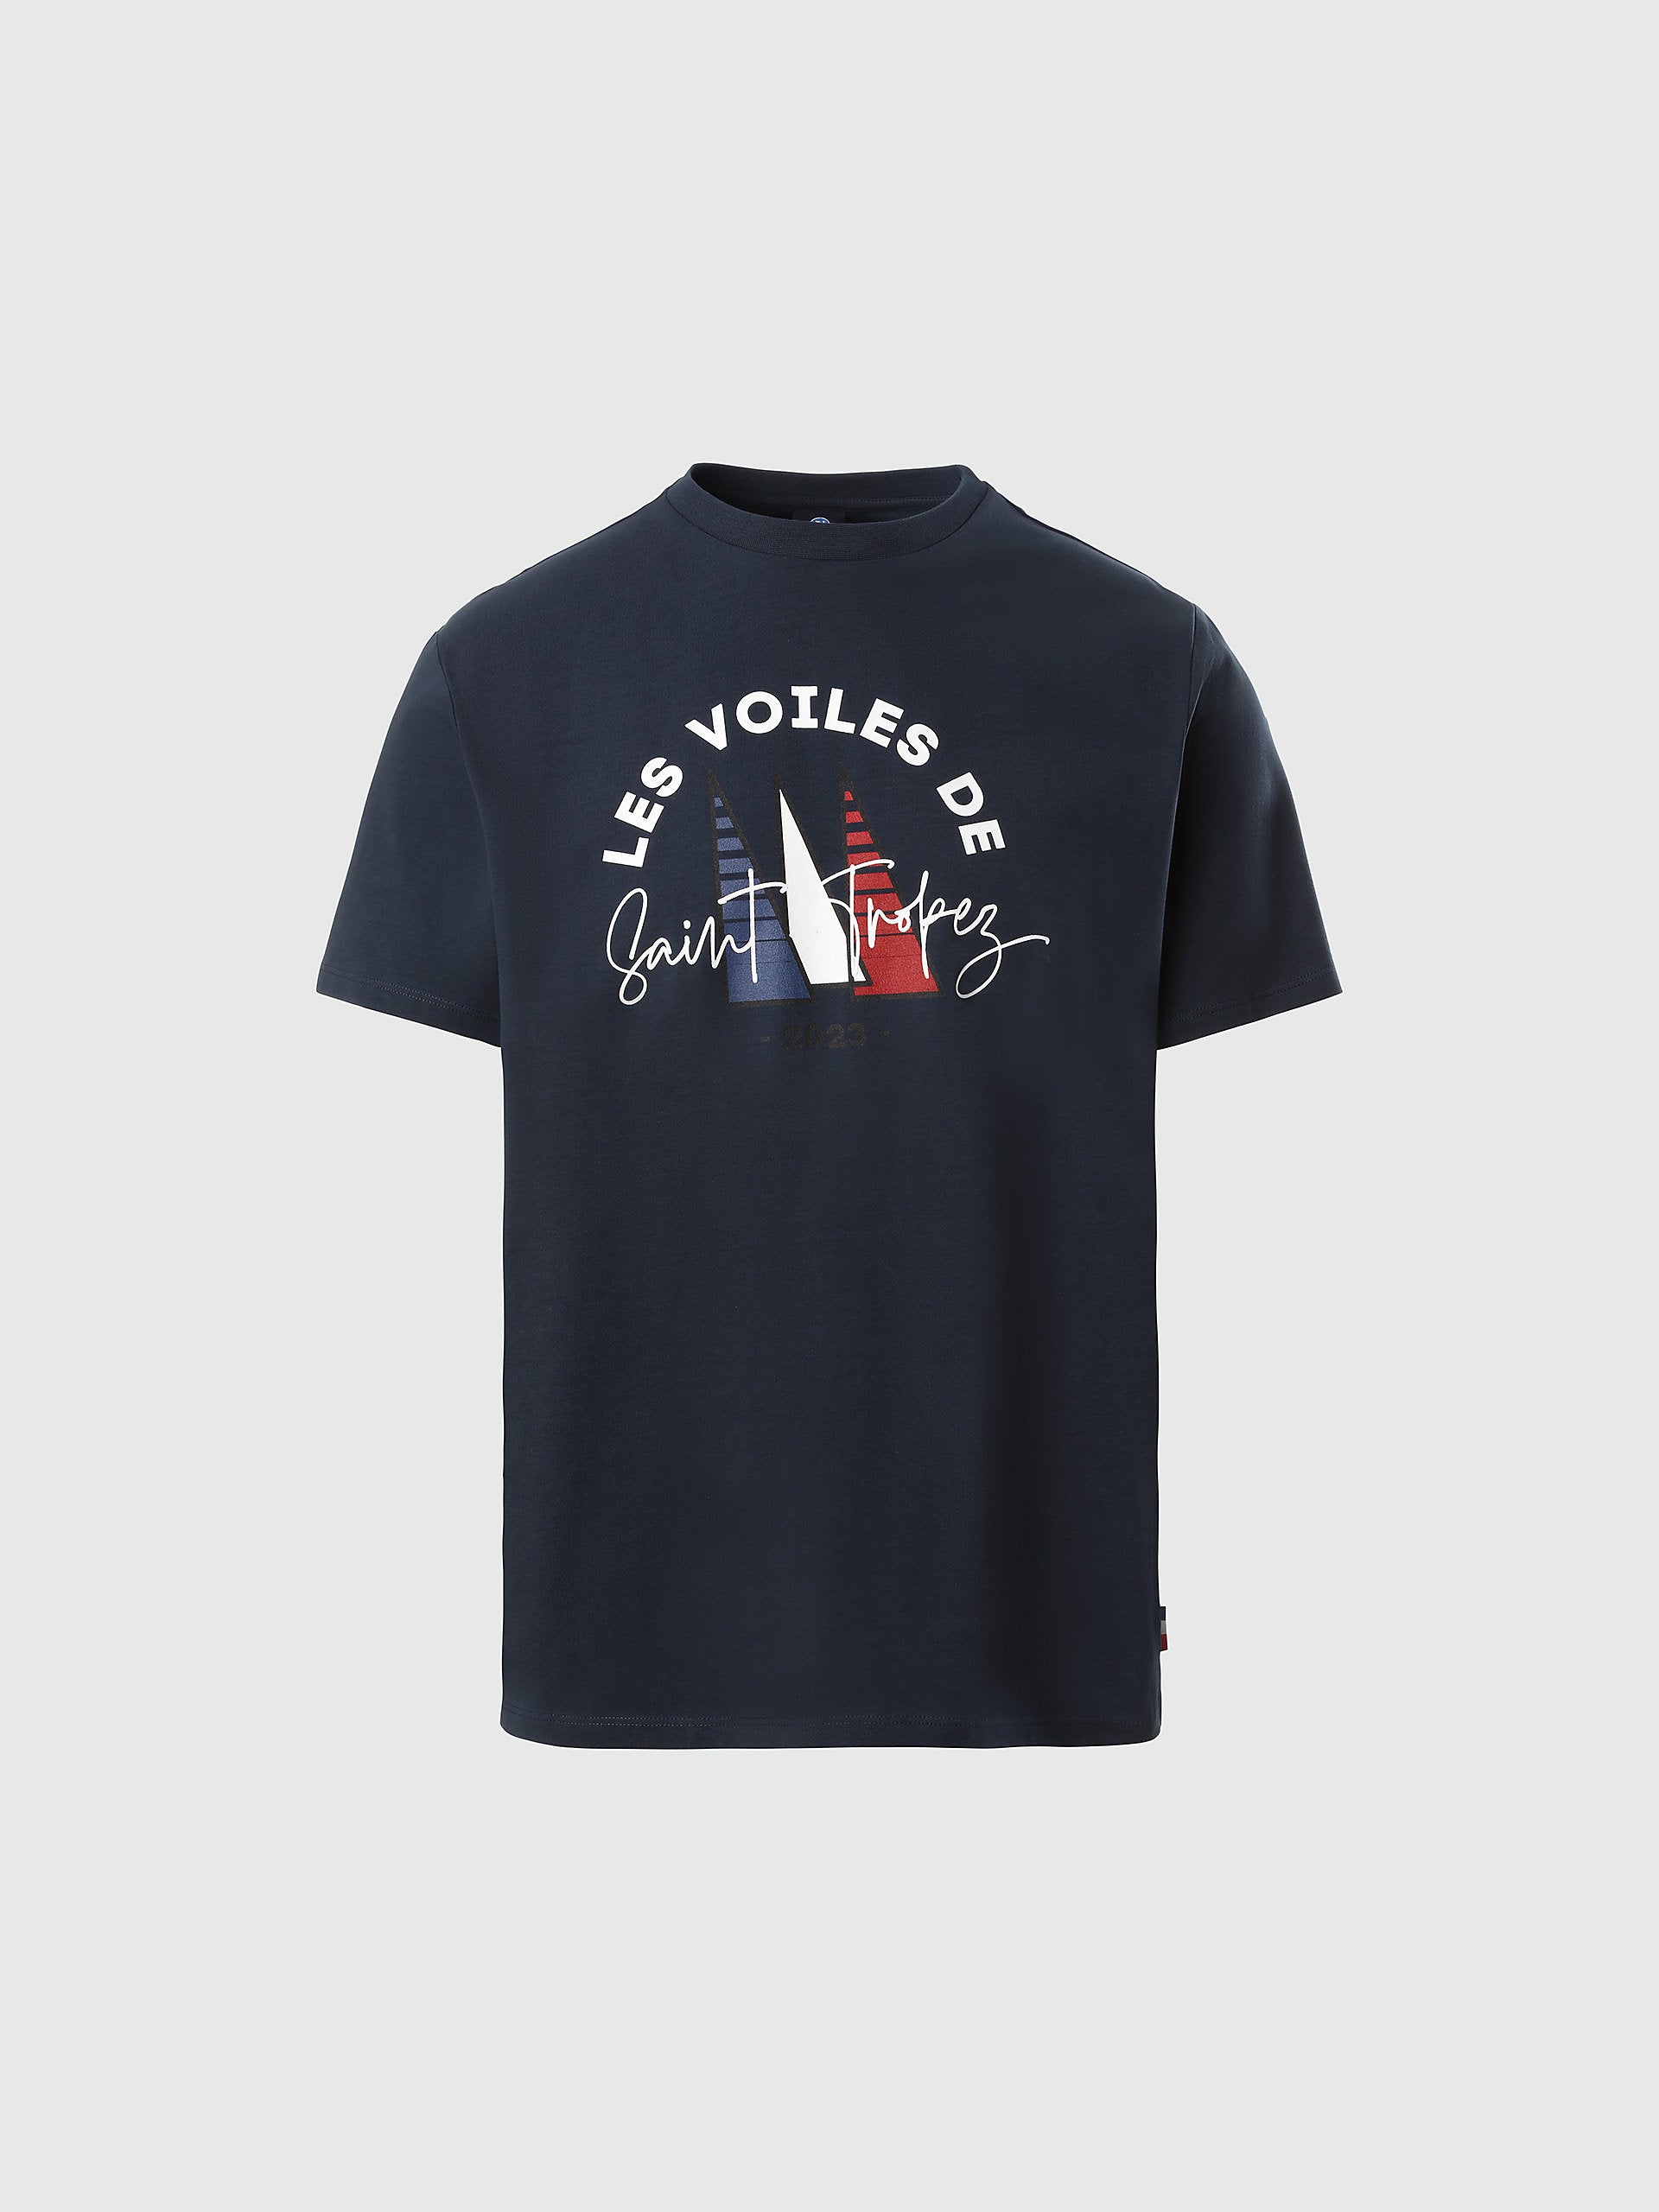 North Sails - Saint-Tropez T-shirtNorth SailsNavy blueXXL